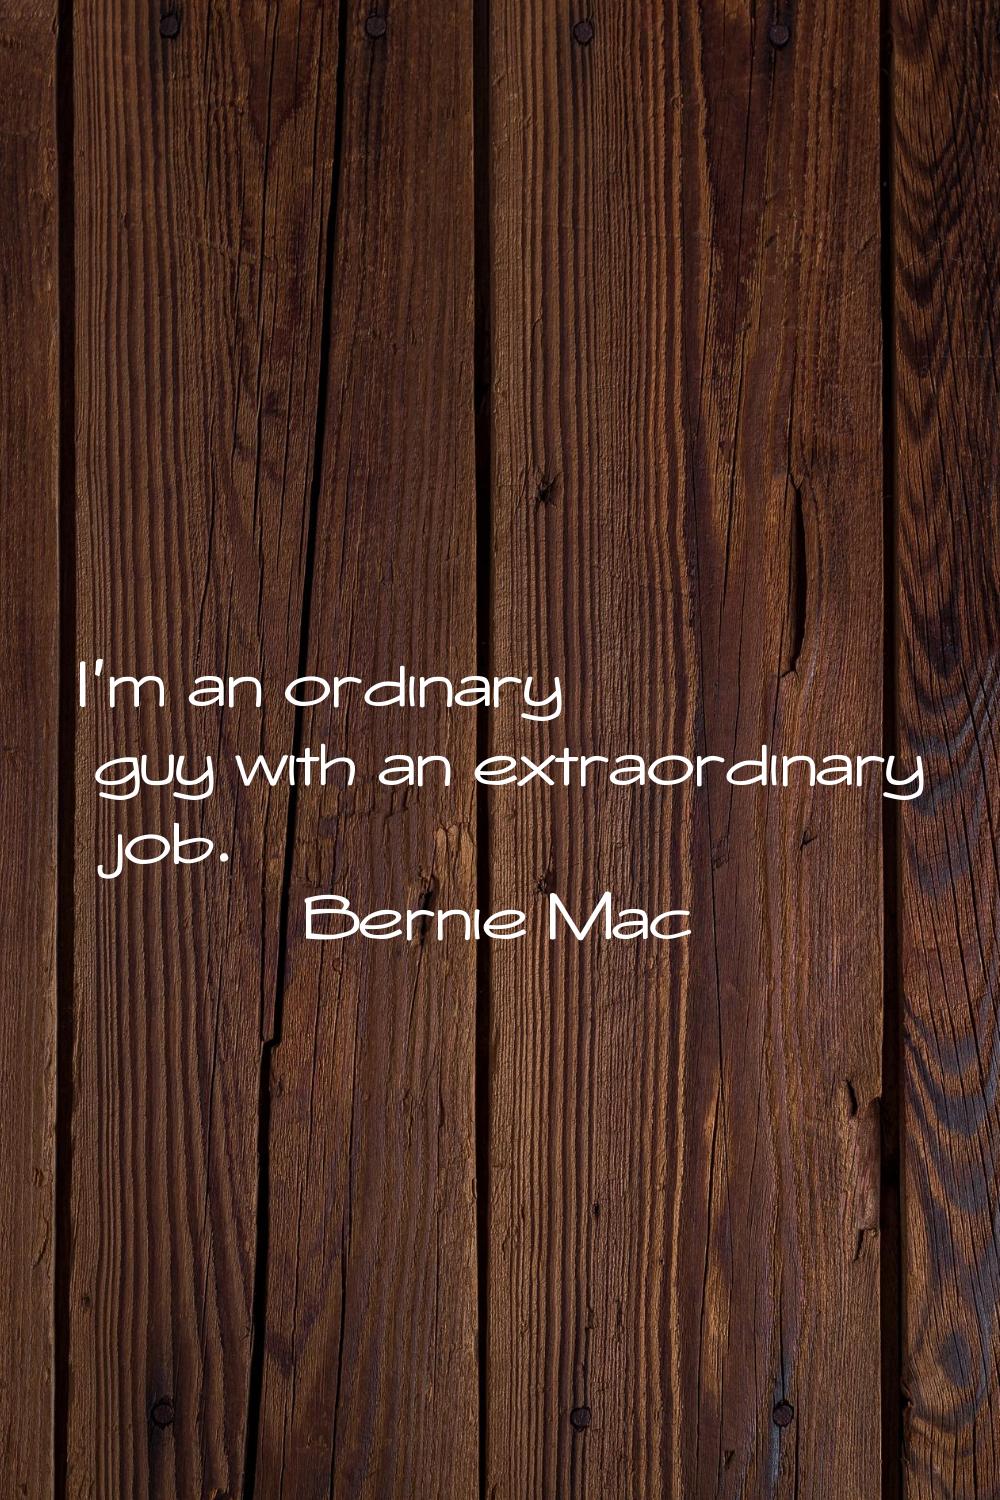 I'm an ordinary guy with an extraordinary job.